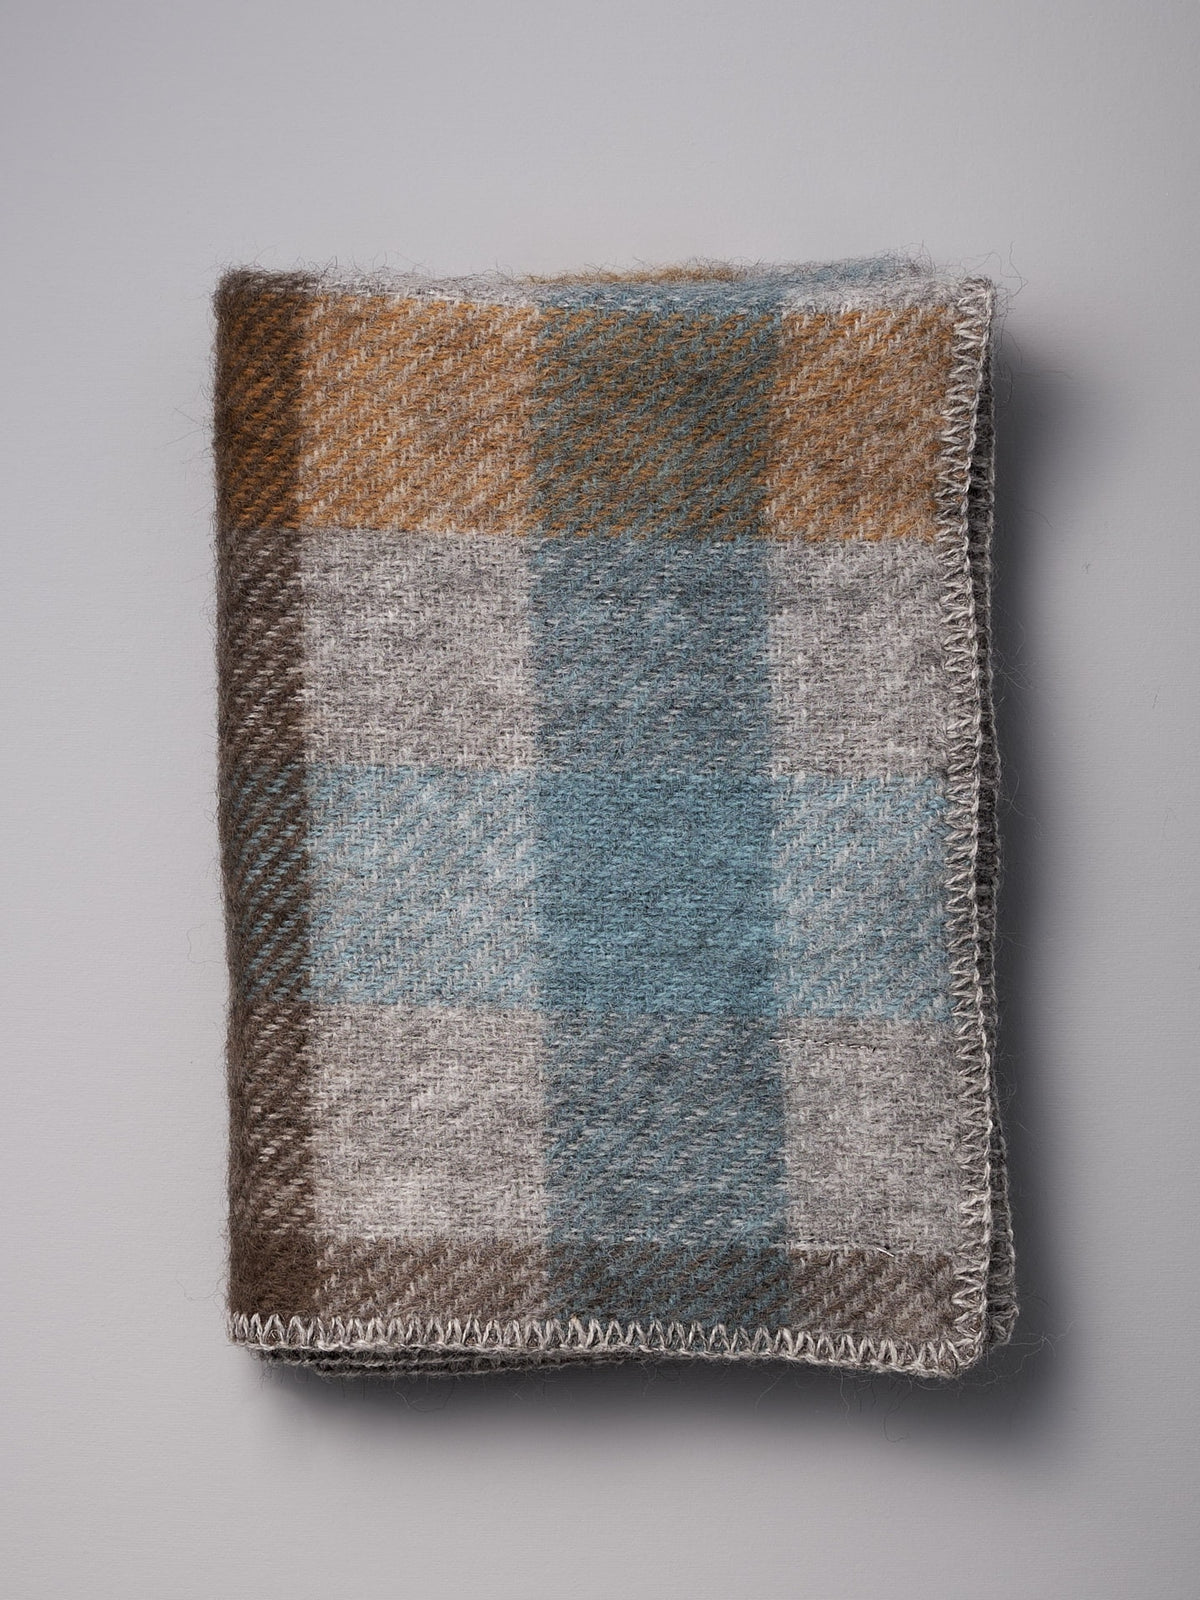 A Klippan Gotland Wool Baby Throw - Multi Turquoise blanket on a white surface.